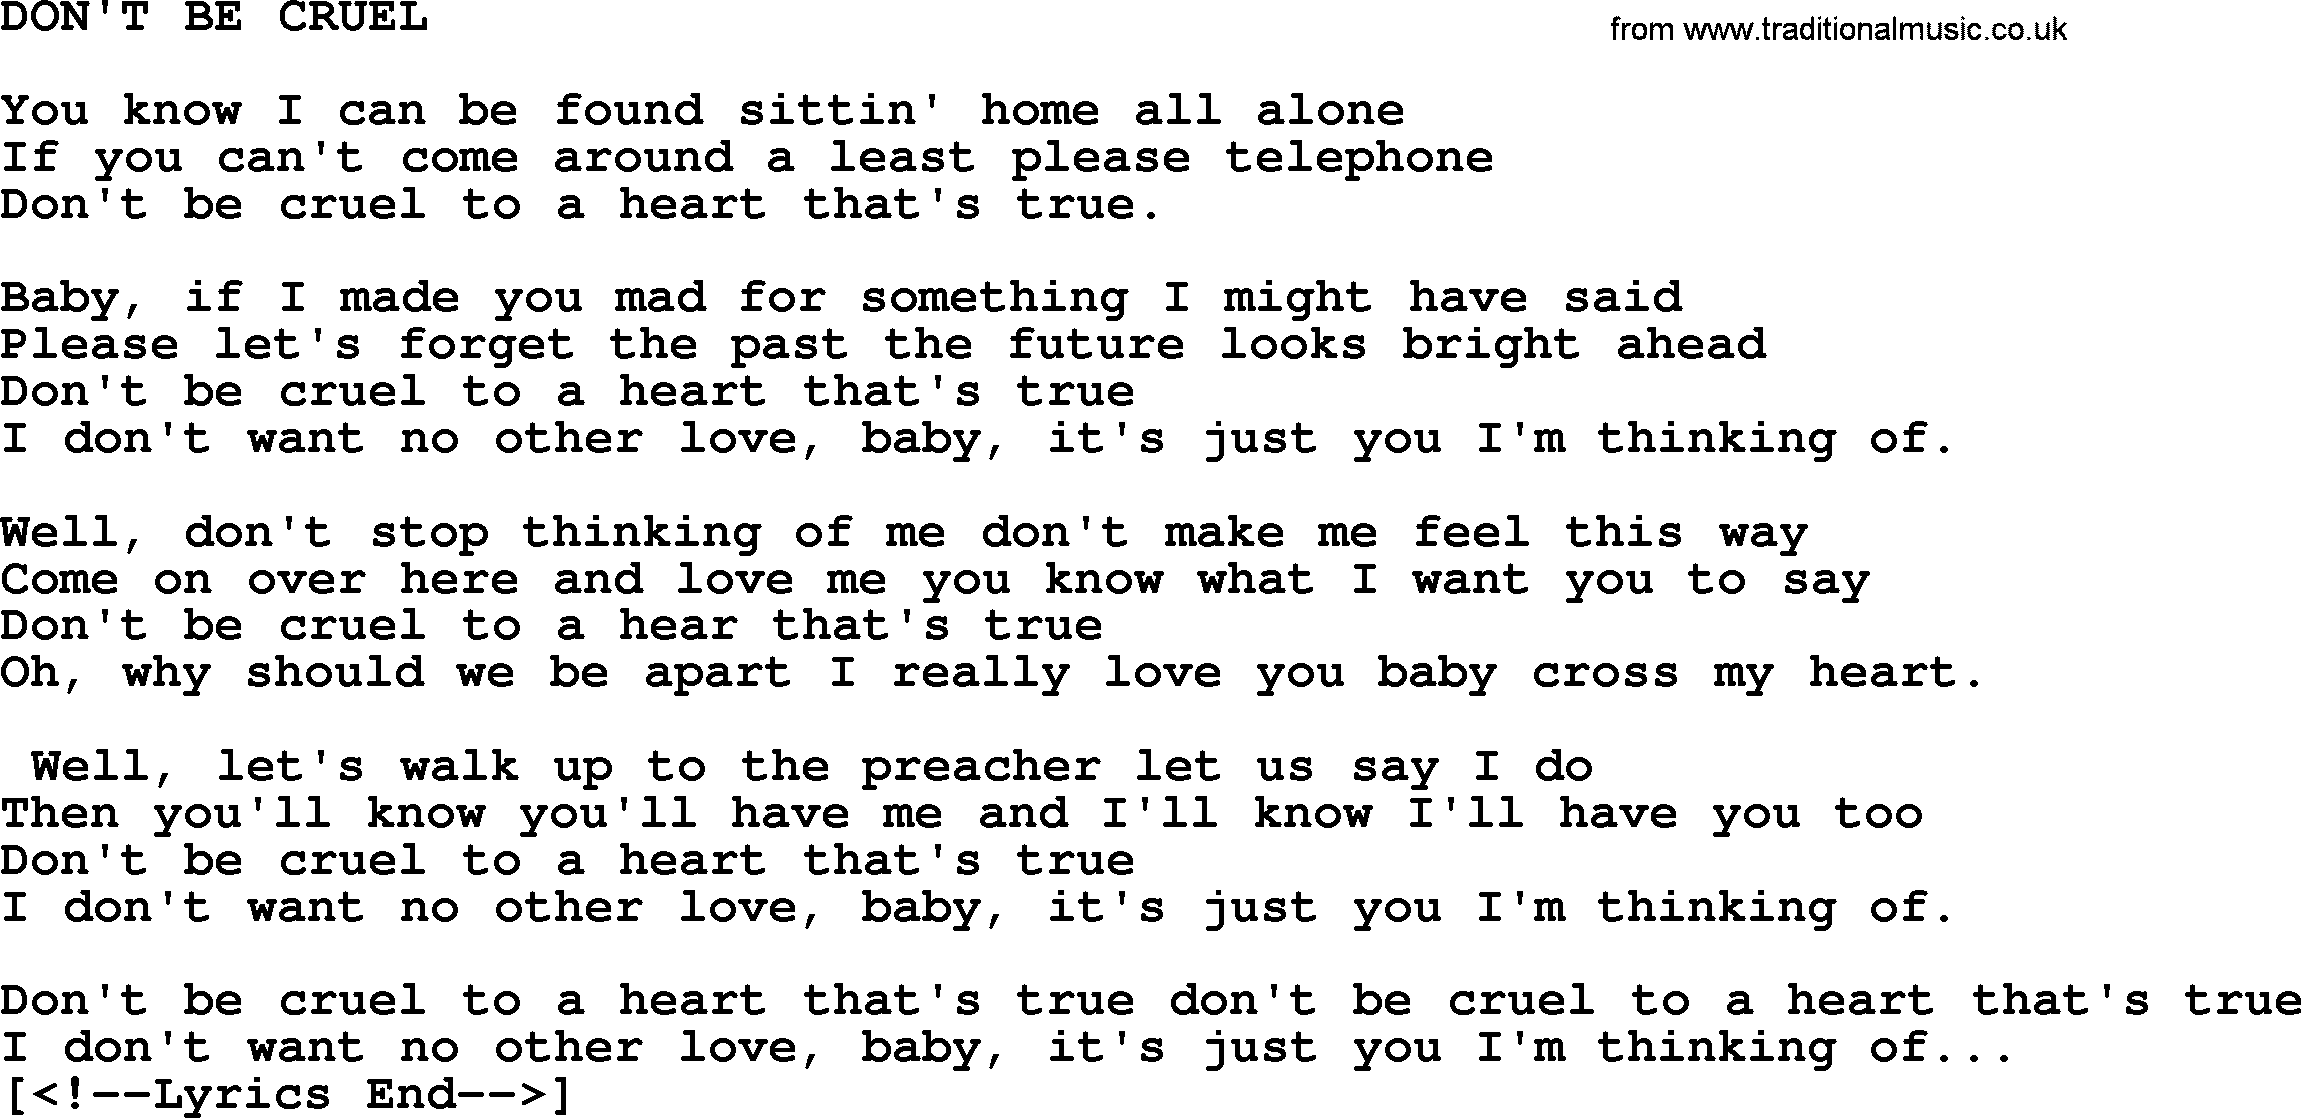 Merle Haggard song: Don't Be Cruel, lyrics.